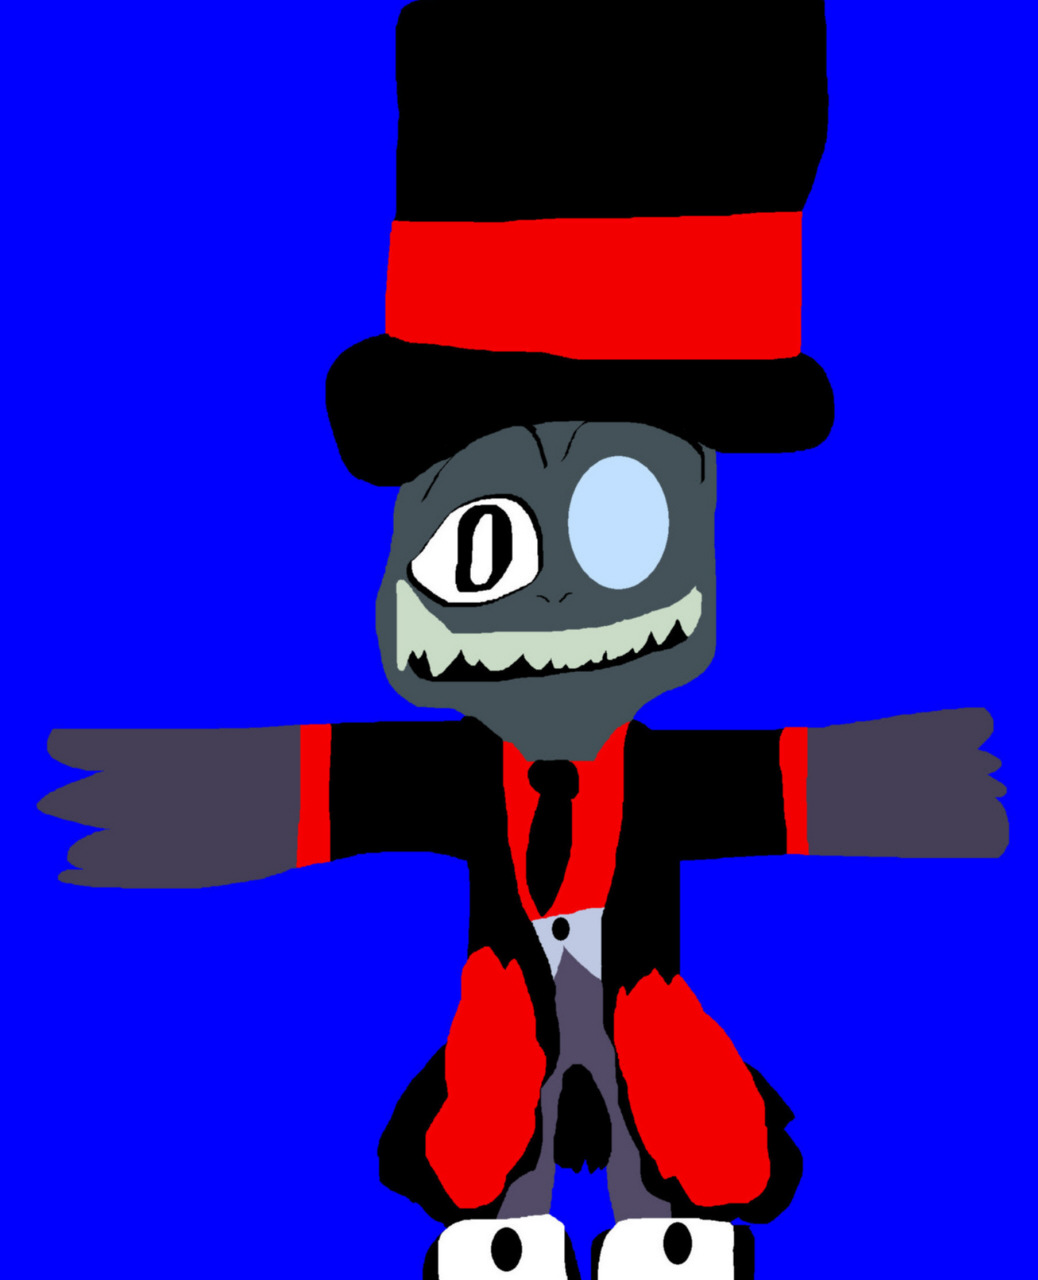 Black Hat is Happy Being Evil MS Paint by Falconlobo